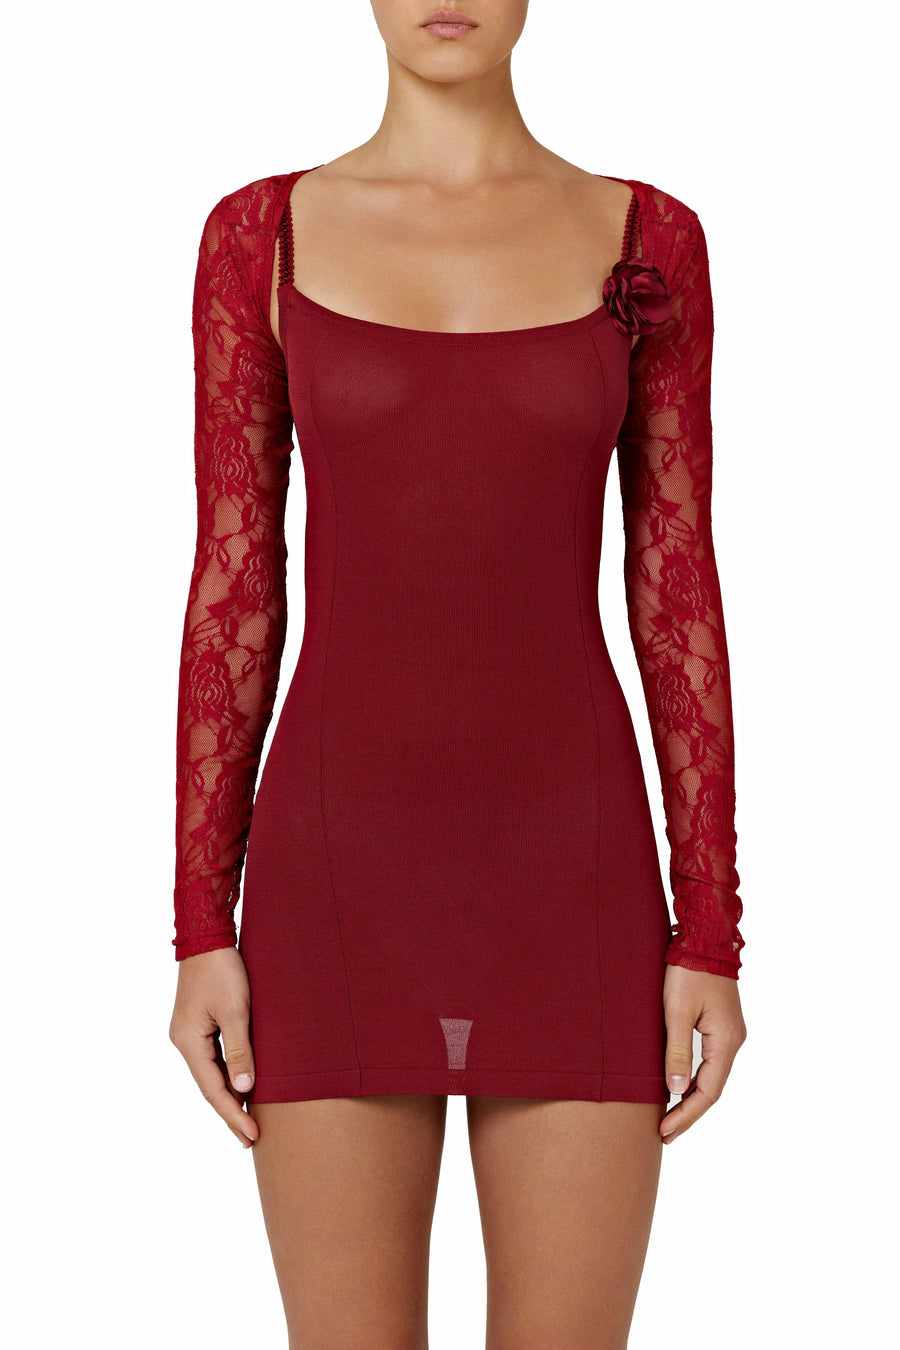 ROMANZA dress- rosso  -  CLOTHING  -  B Ā M B A S W I M